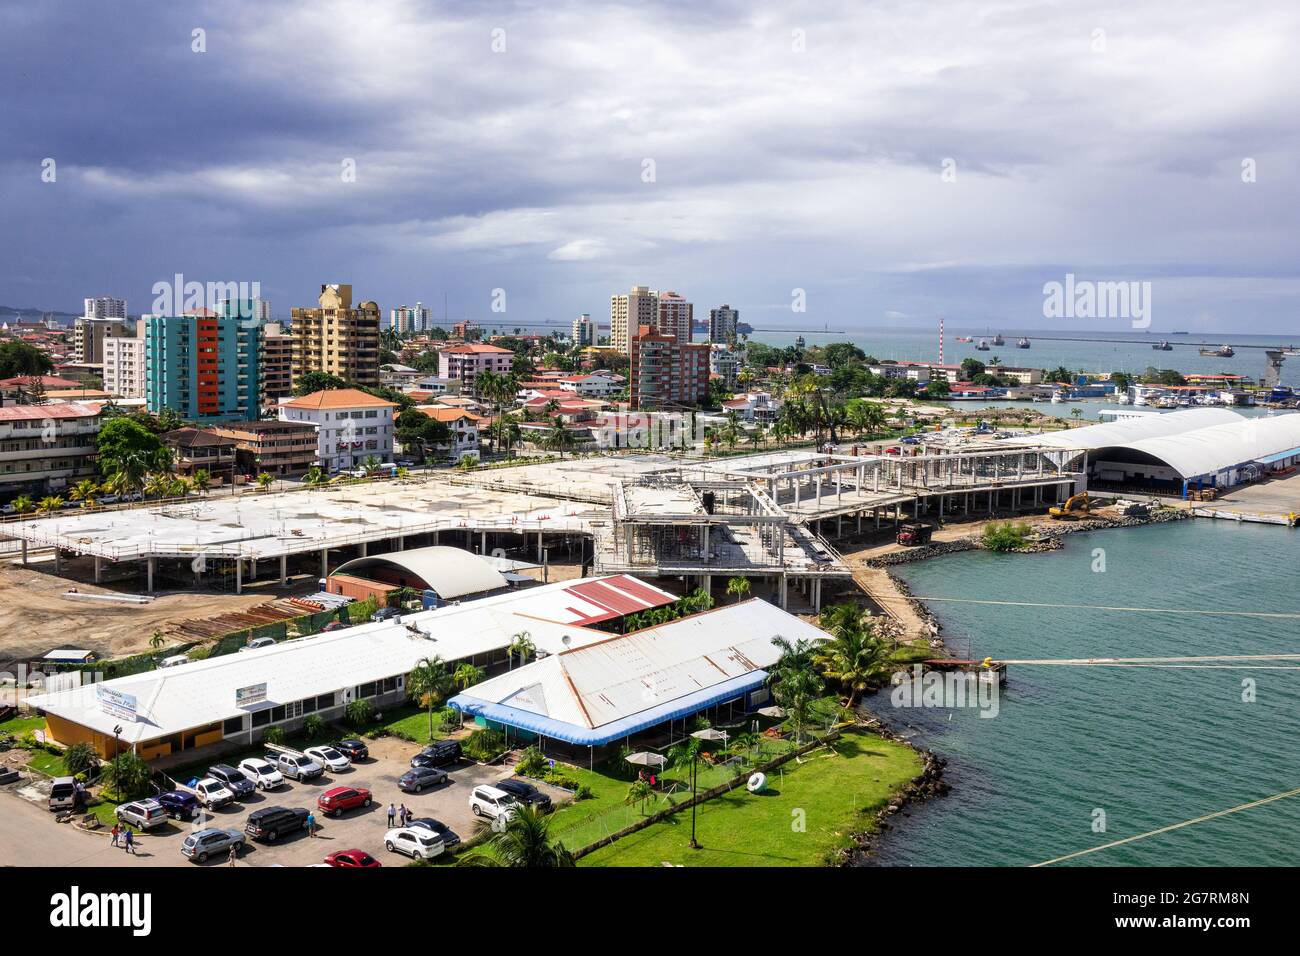 Expansion Construction Of Colon Cruise Port Panama, Entrance To The Panama Canal November 2018 Stock Photo